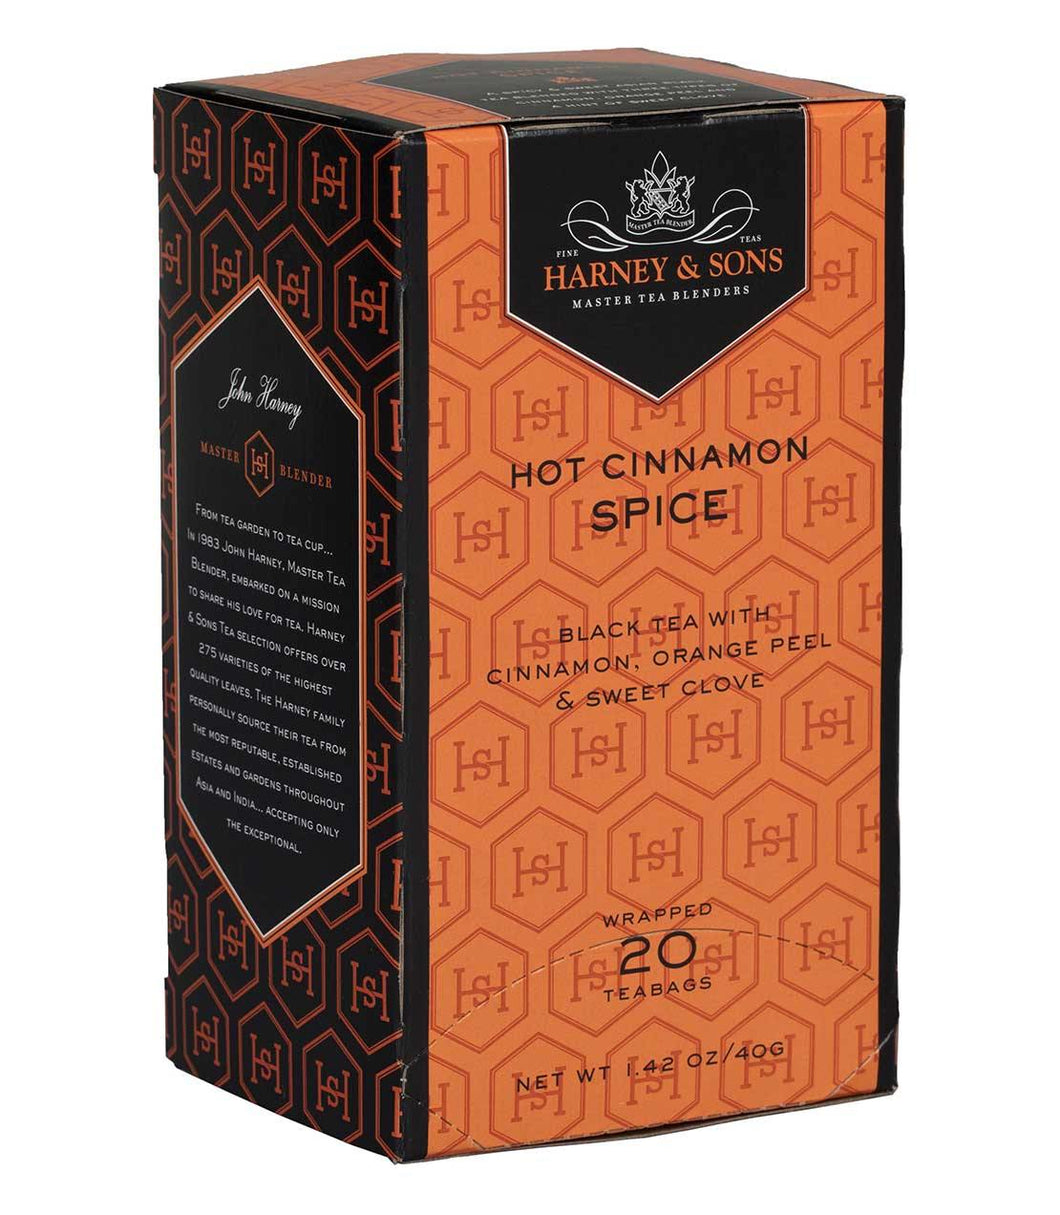 Harney & Sons Hot Cinnamon Spice 20 Premium Teabags - Premium Teas Canada